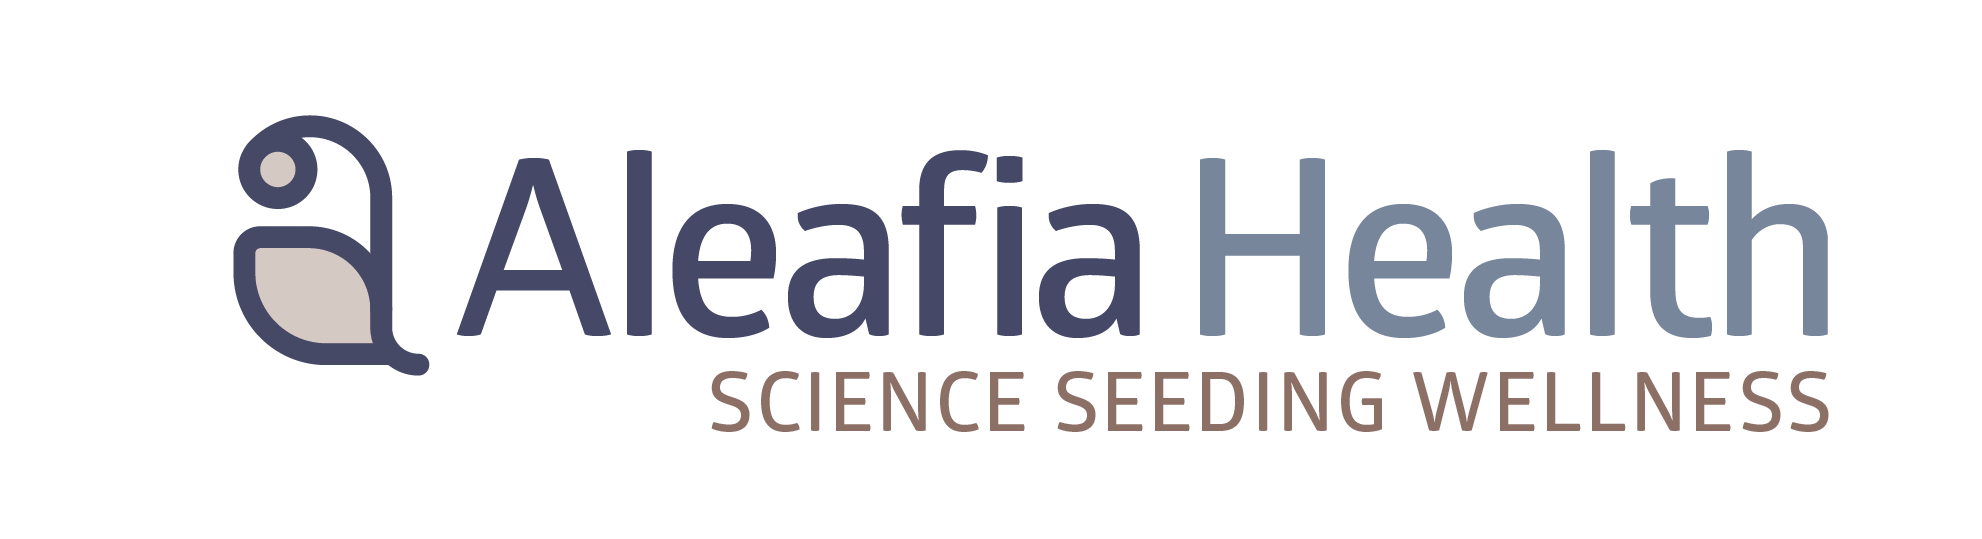 Aleafia Health to Announce 2020 First Quarter Results